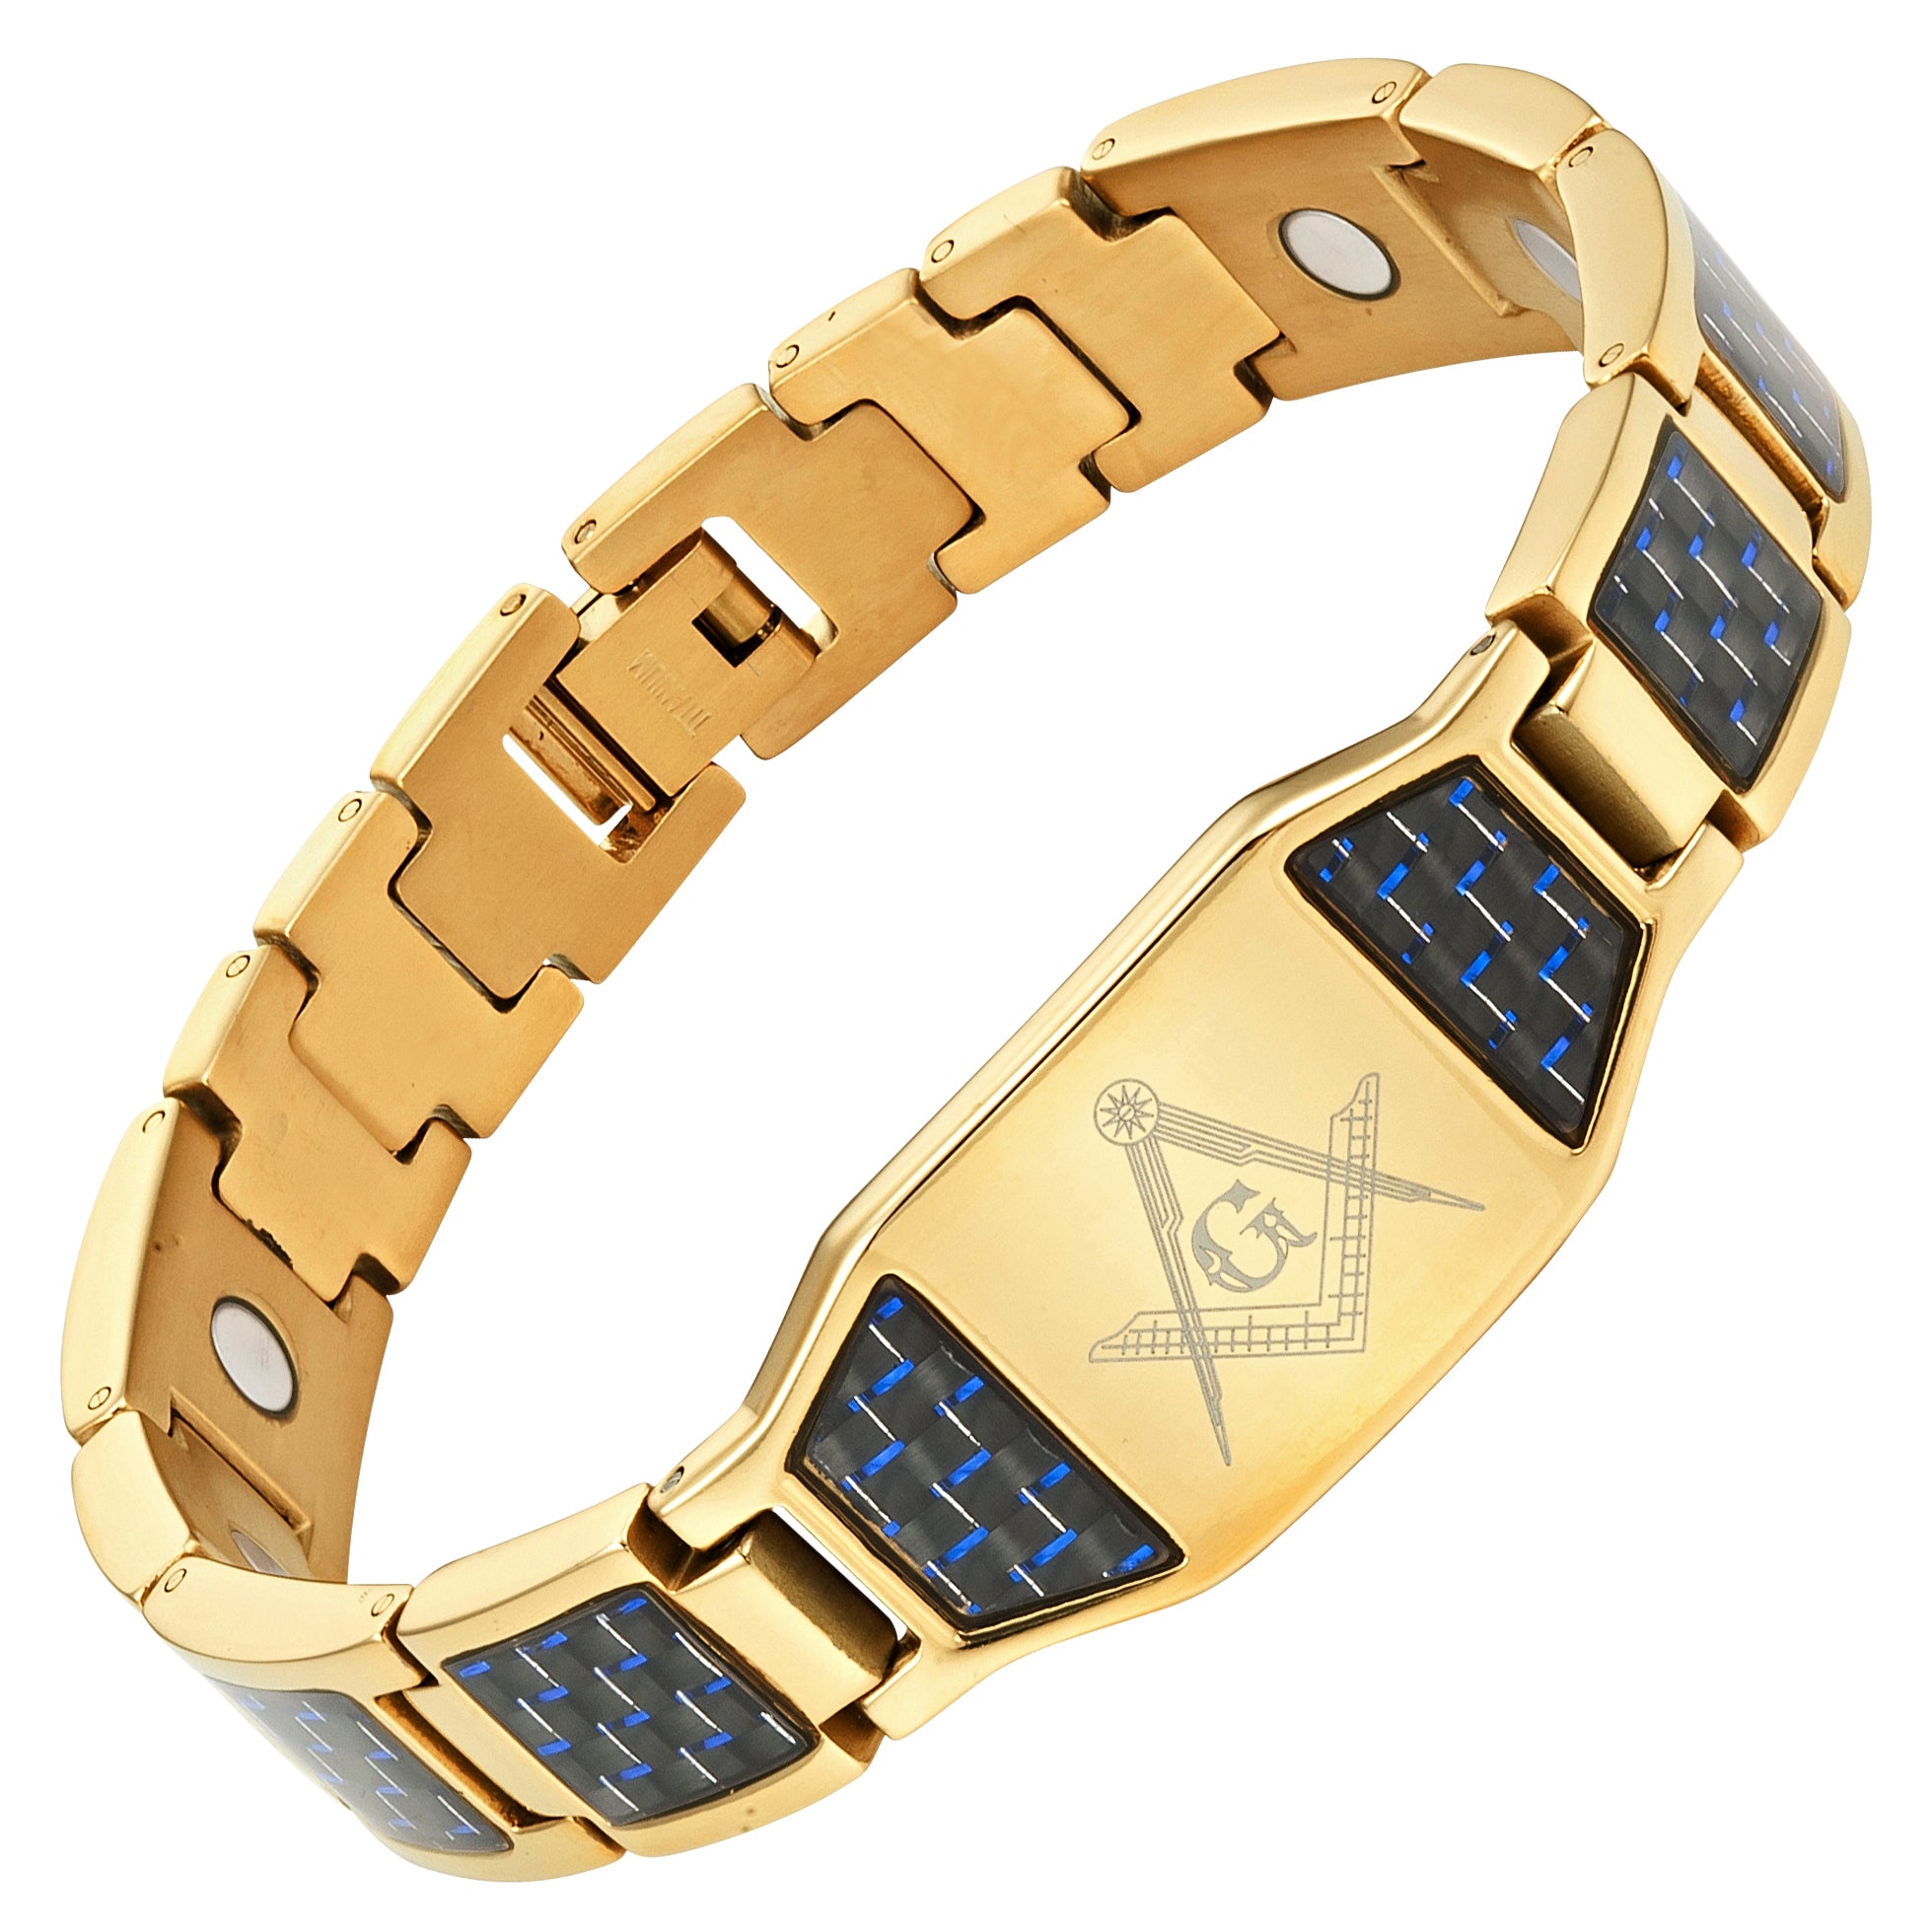 MasonicMan Gold Titanium Masonic Bracelet with Blue Carbon Fiber